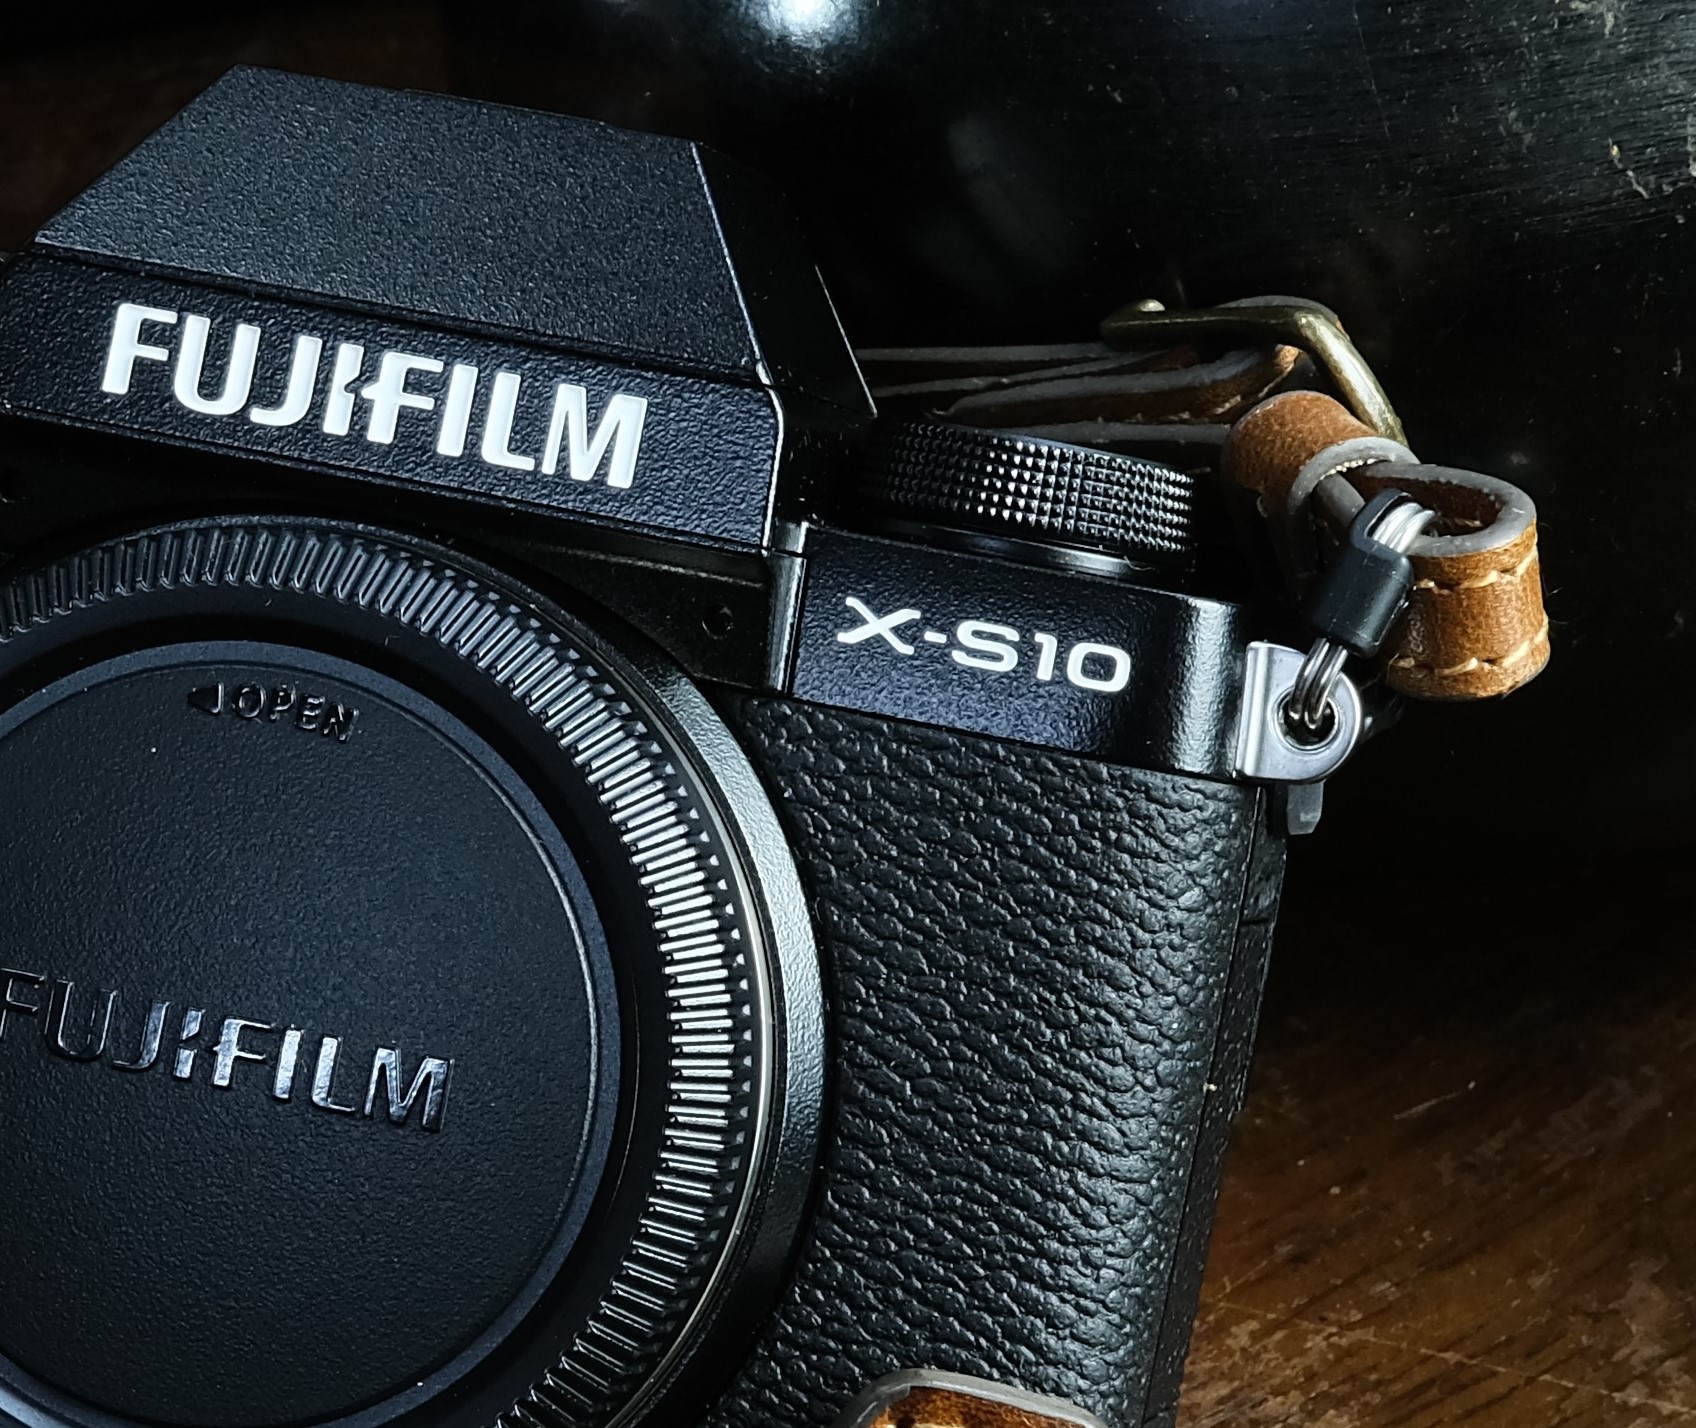 Fujifilm X-S10 series